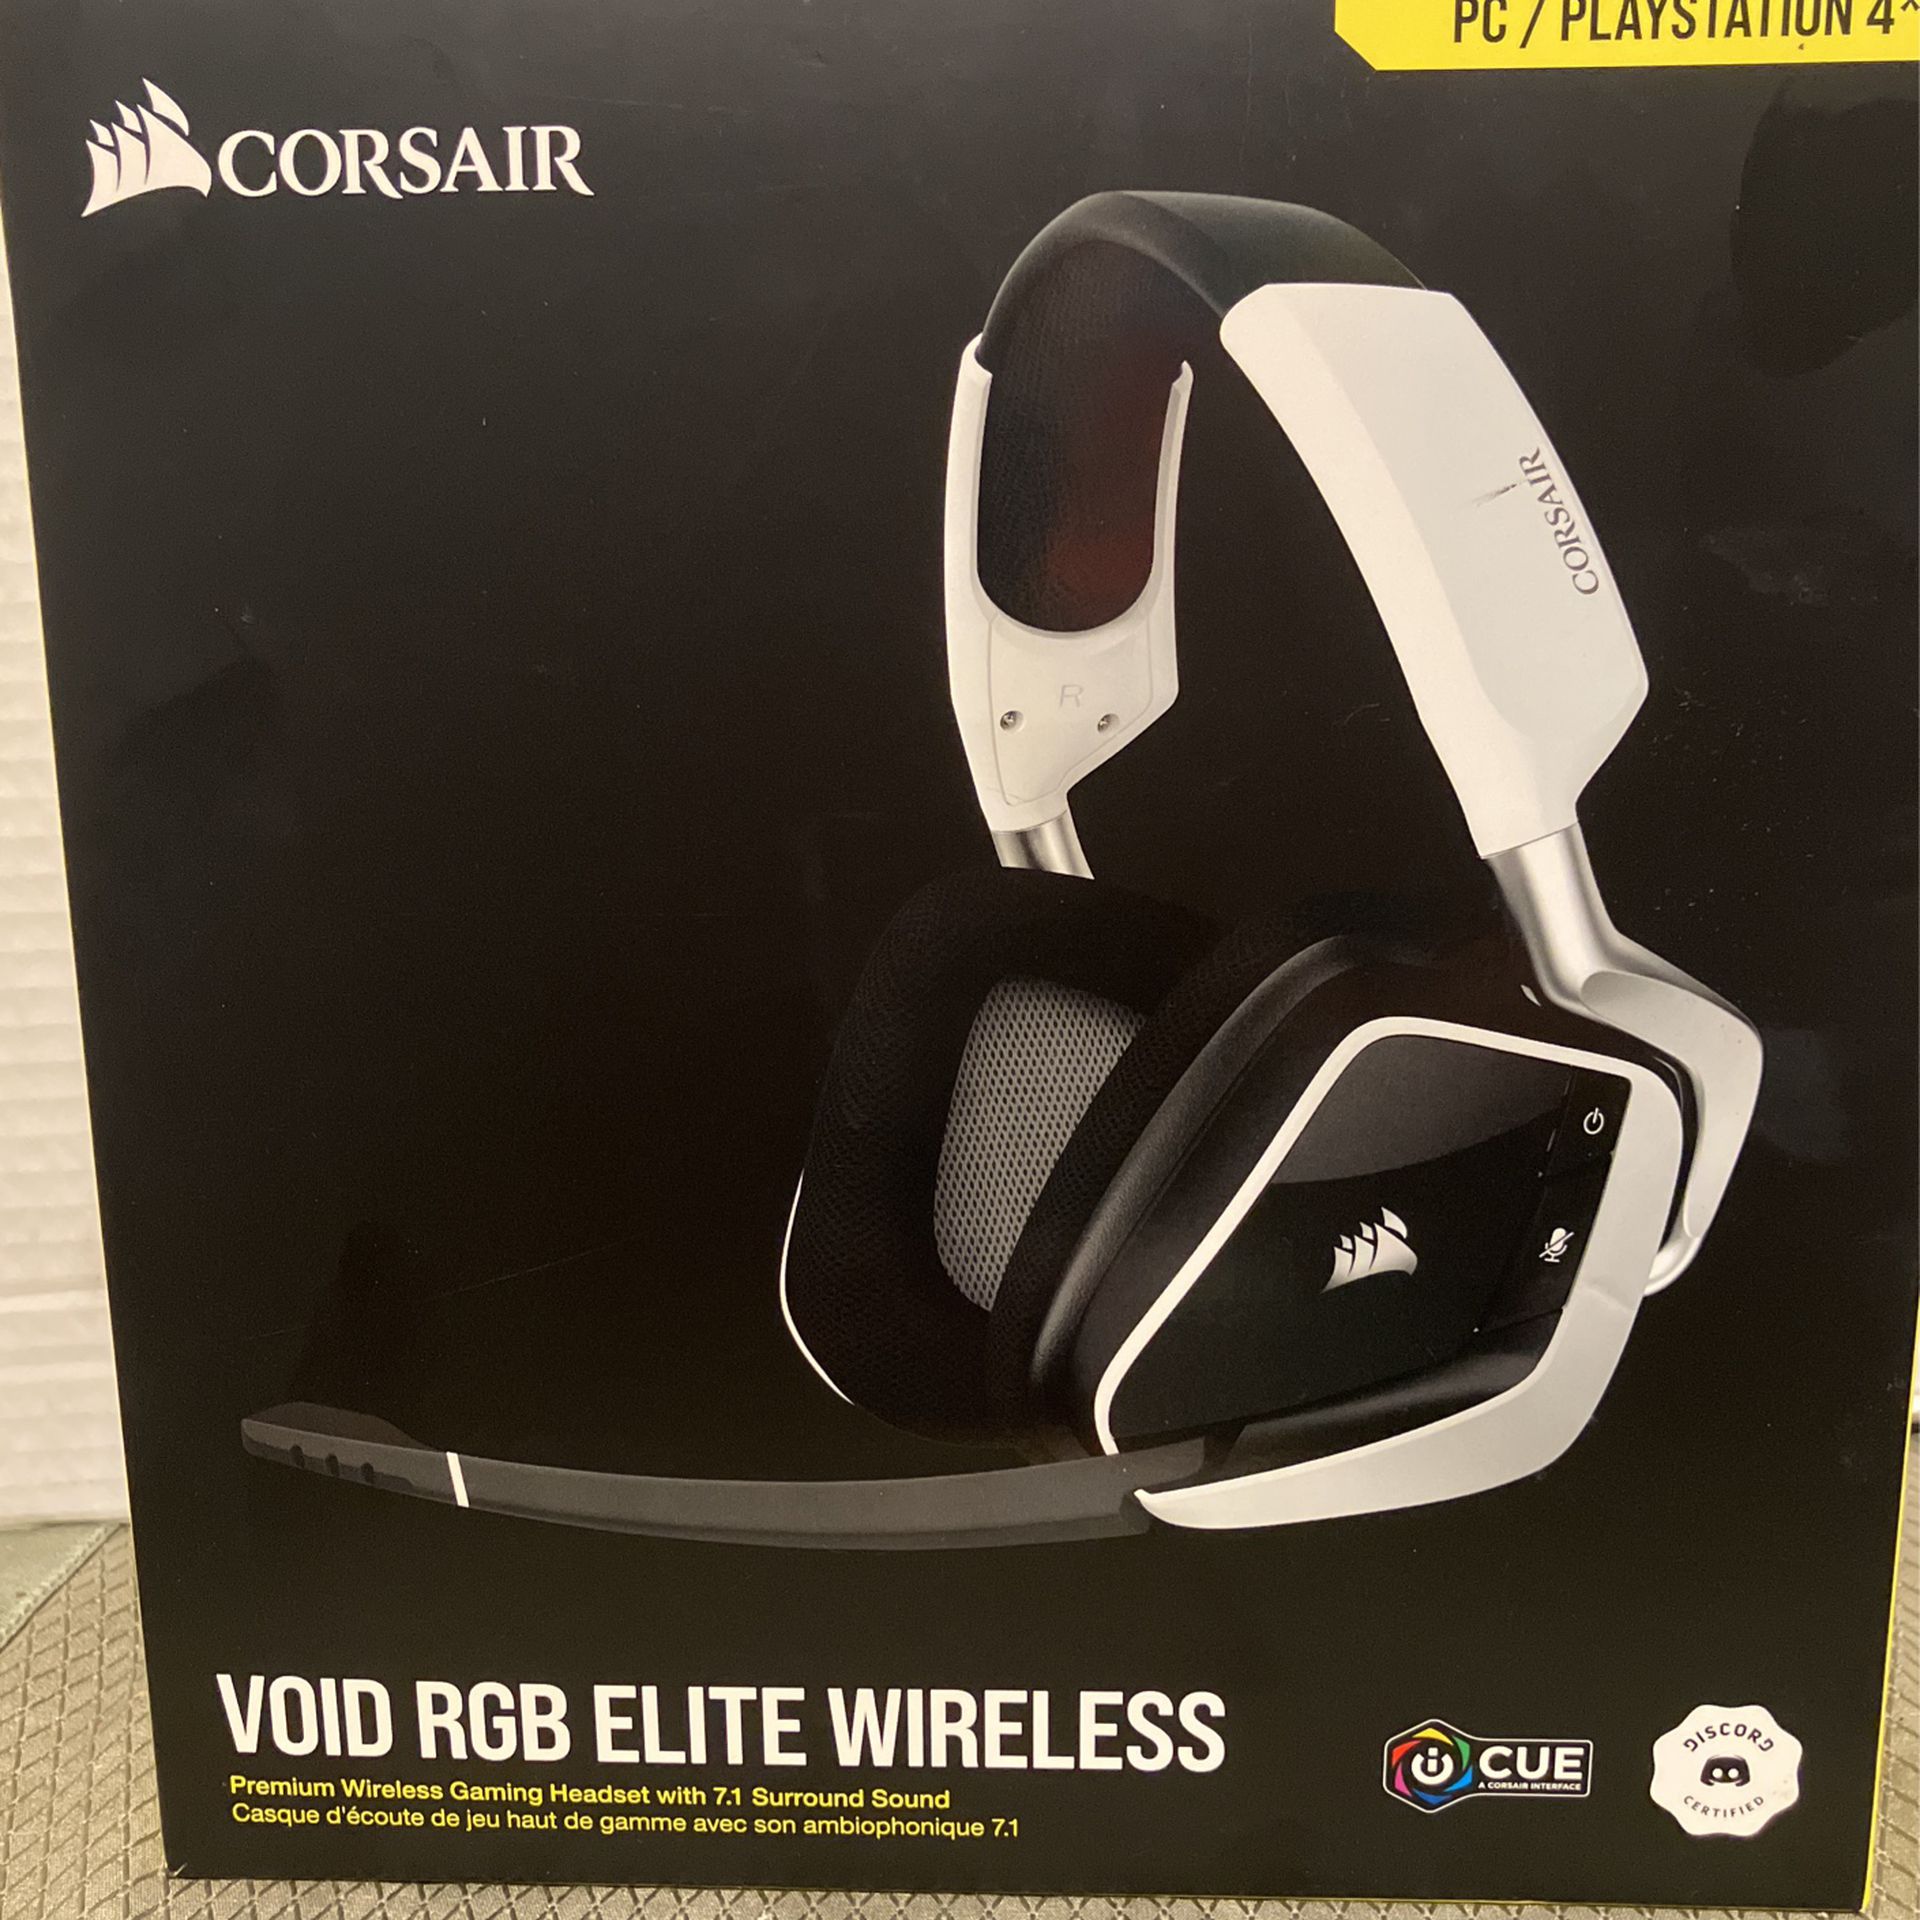 NEW Corsair PC/Playstation 4 Void RGB Elite Wireless Gaming Headset